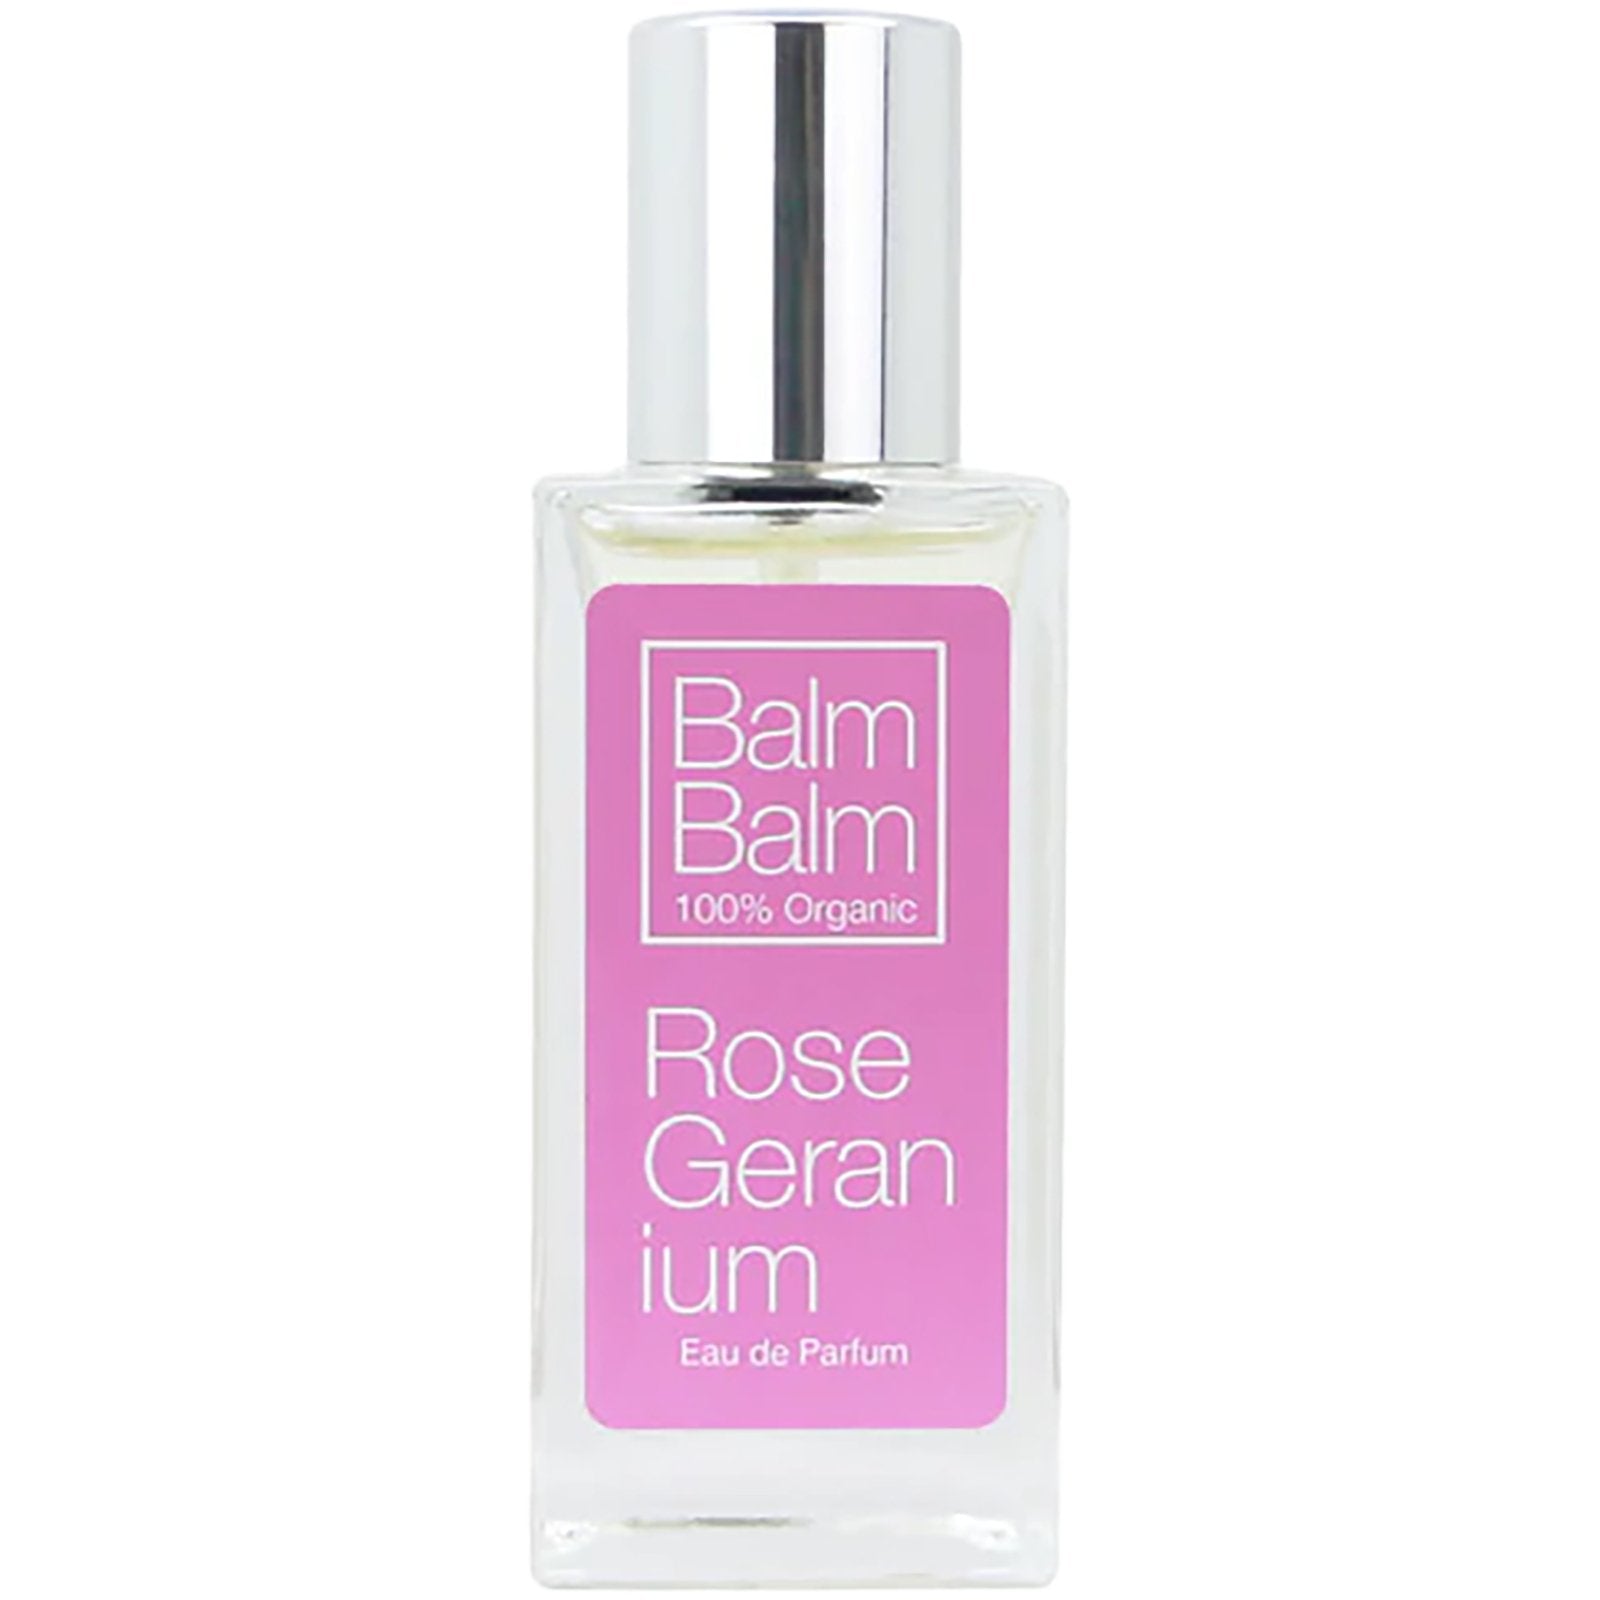 Rose Geranium Natural Perfume - mypure.co.uk